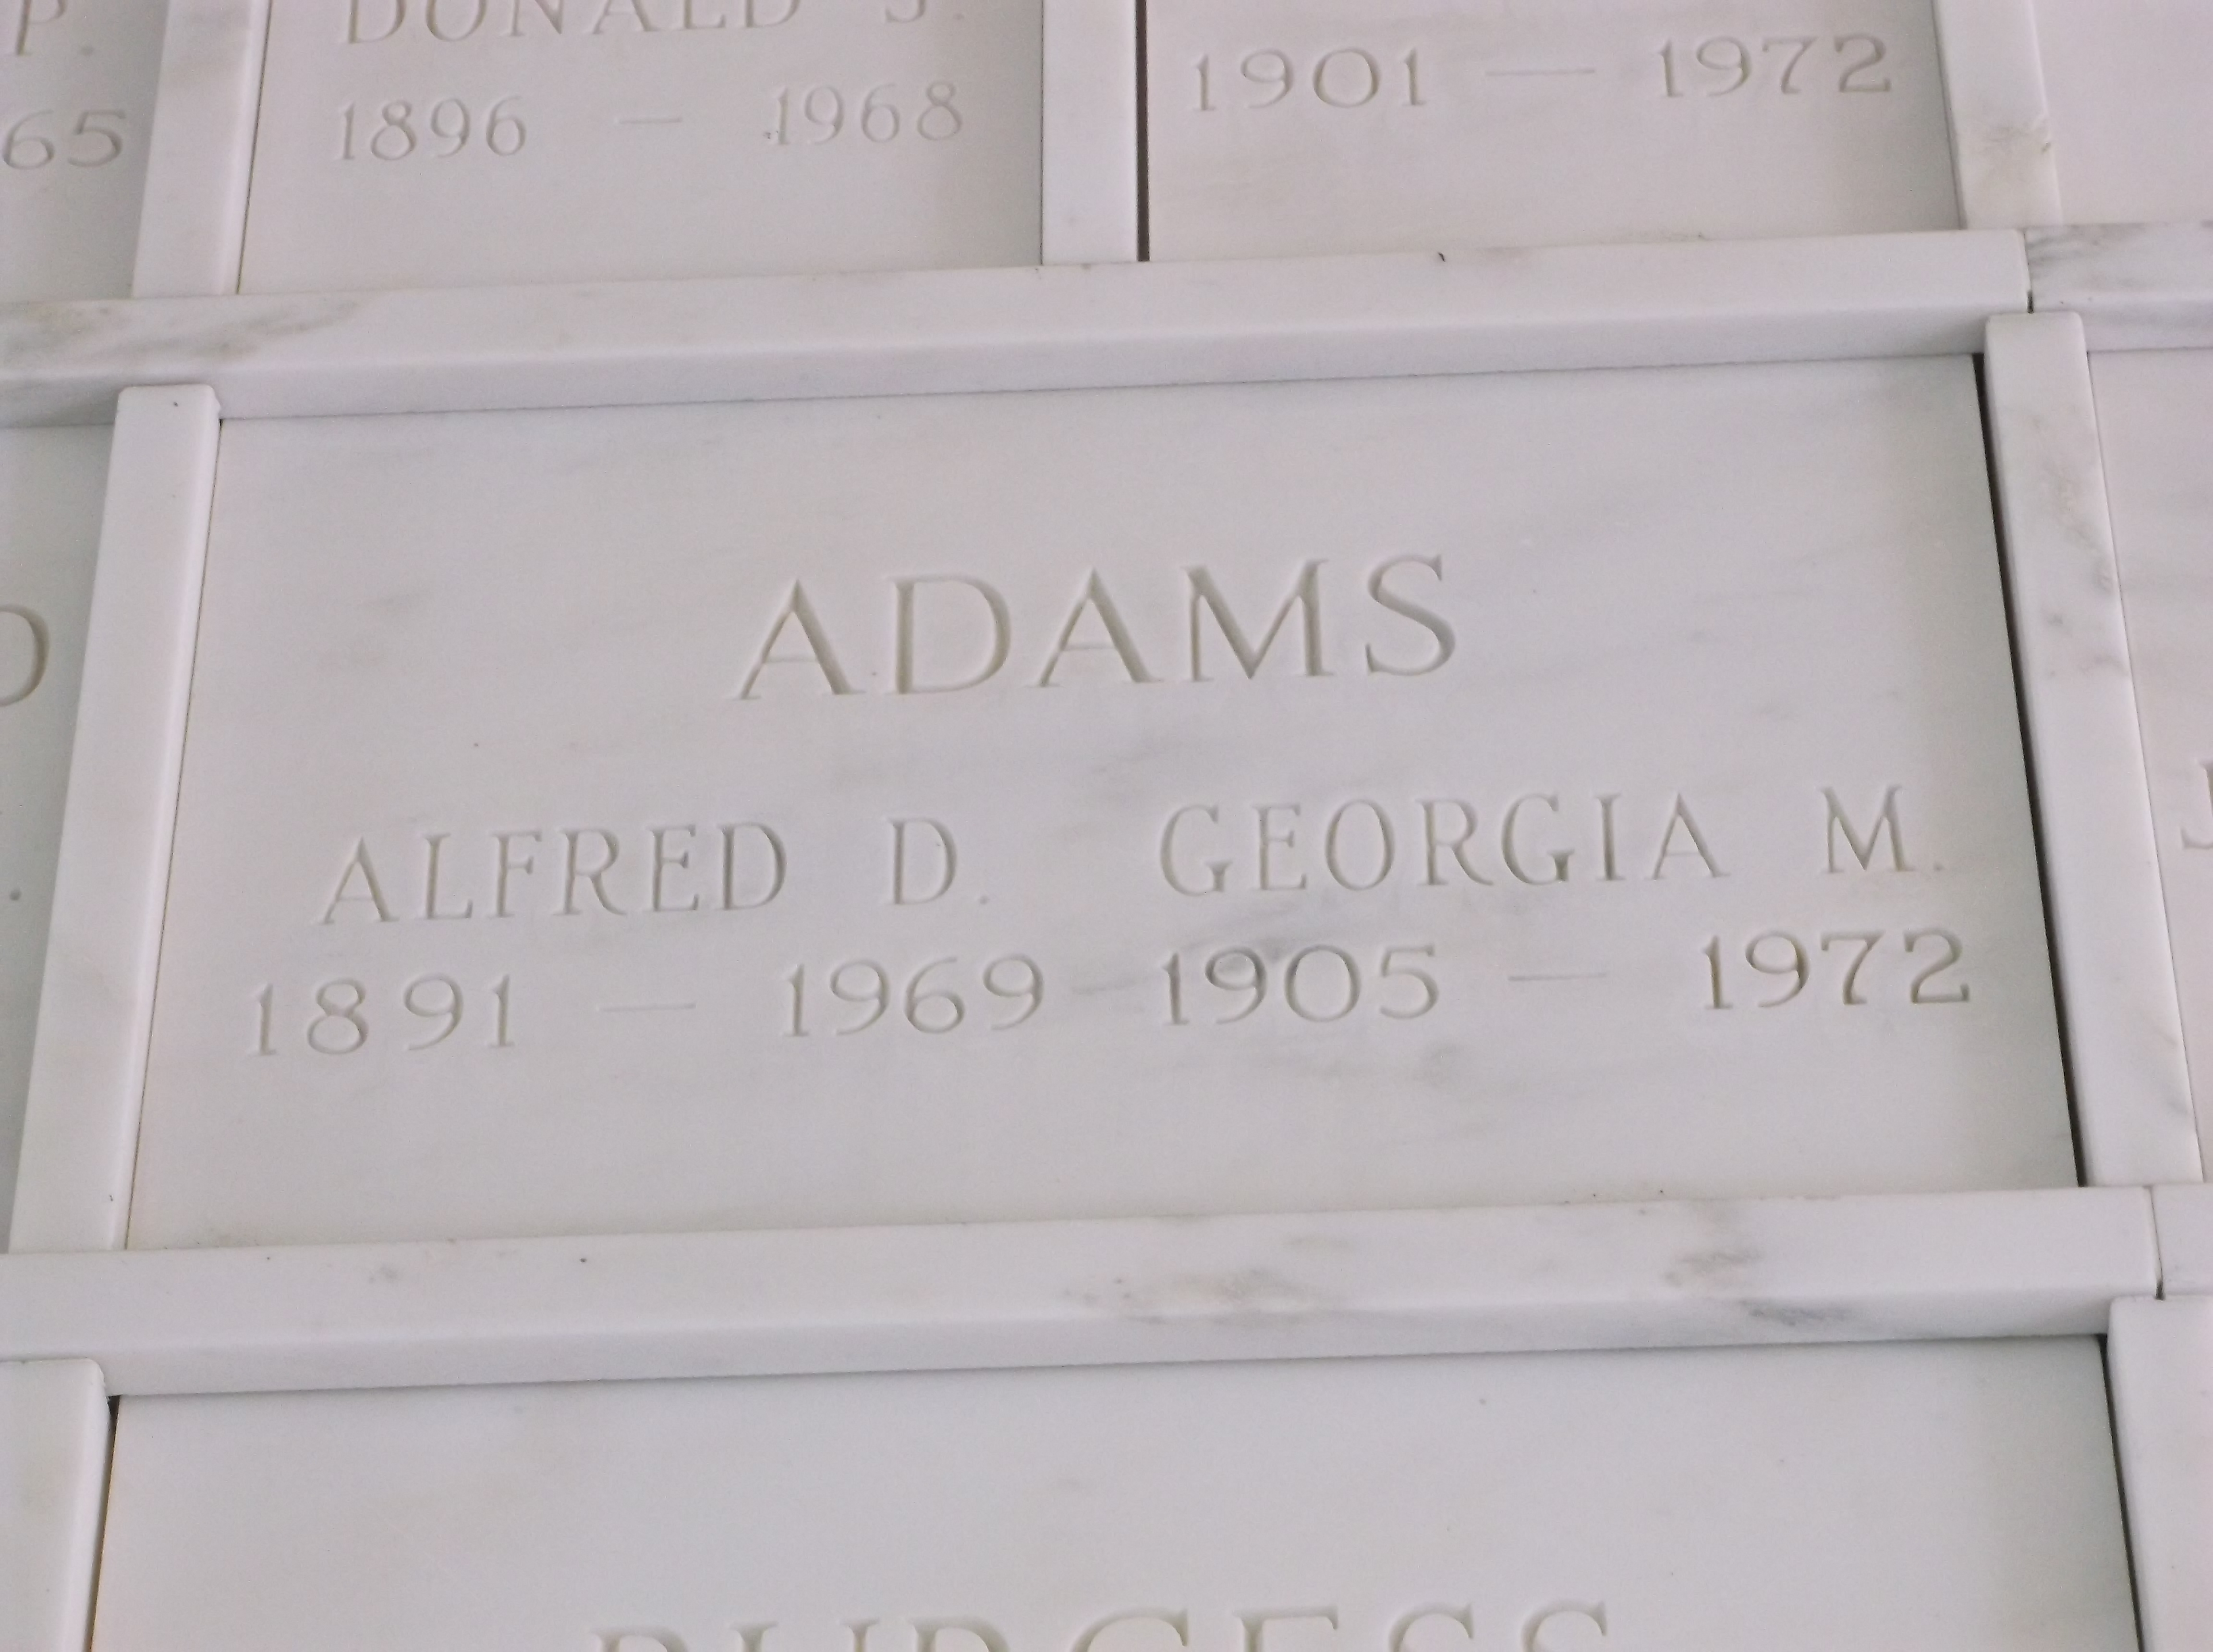 Alfred D Adams